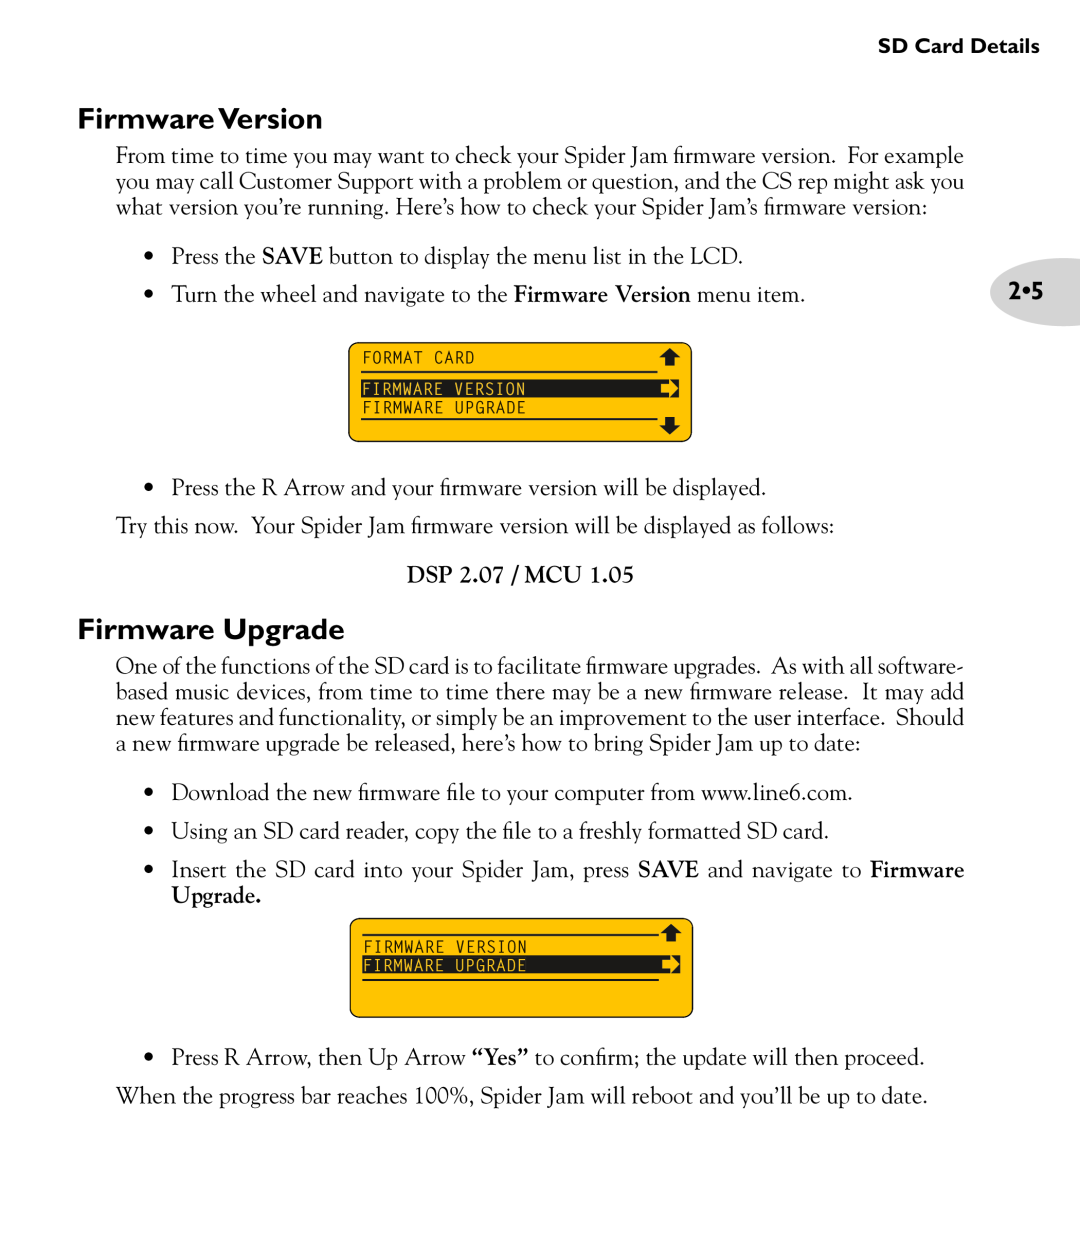 Line 6 Amp manual Firmware Version, Firmware Upgrade, DSP 2.07 / MCU 